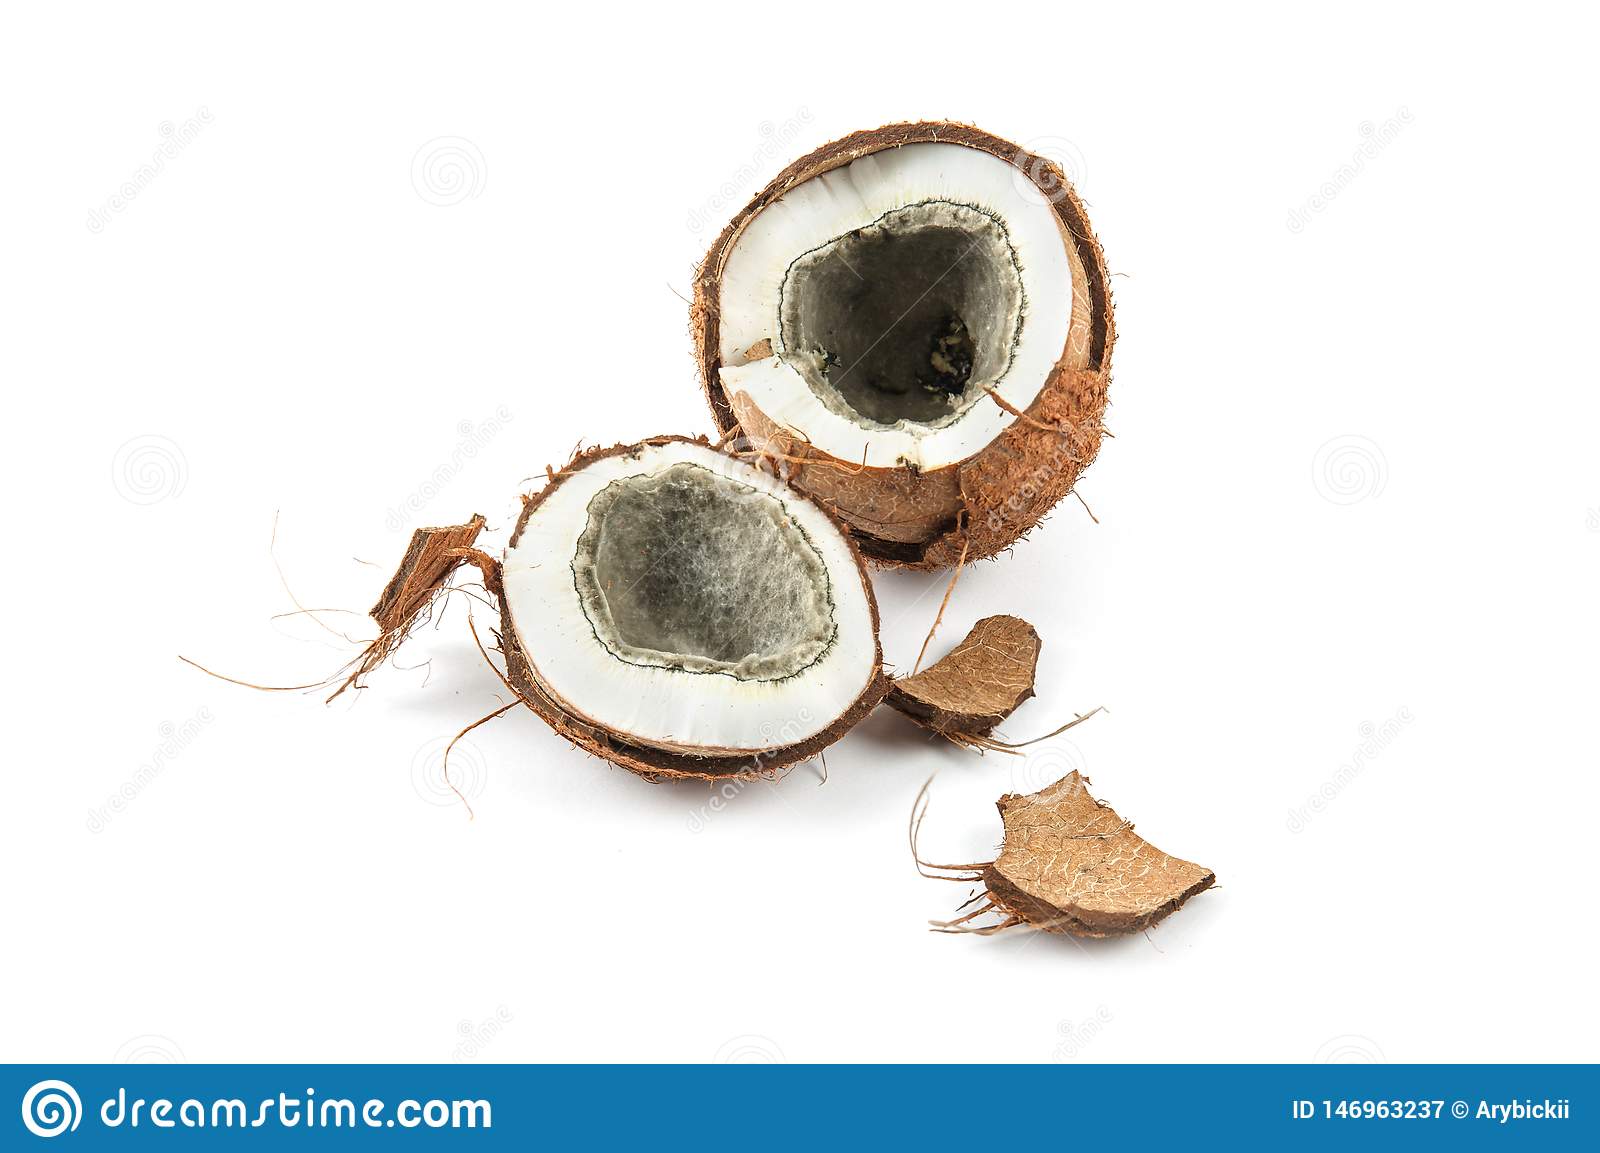 bad-coconut-white-background-food-ingredients-health-146963237